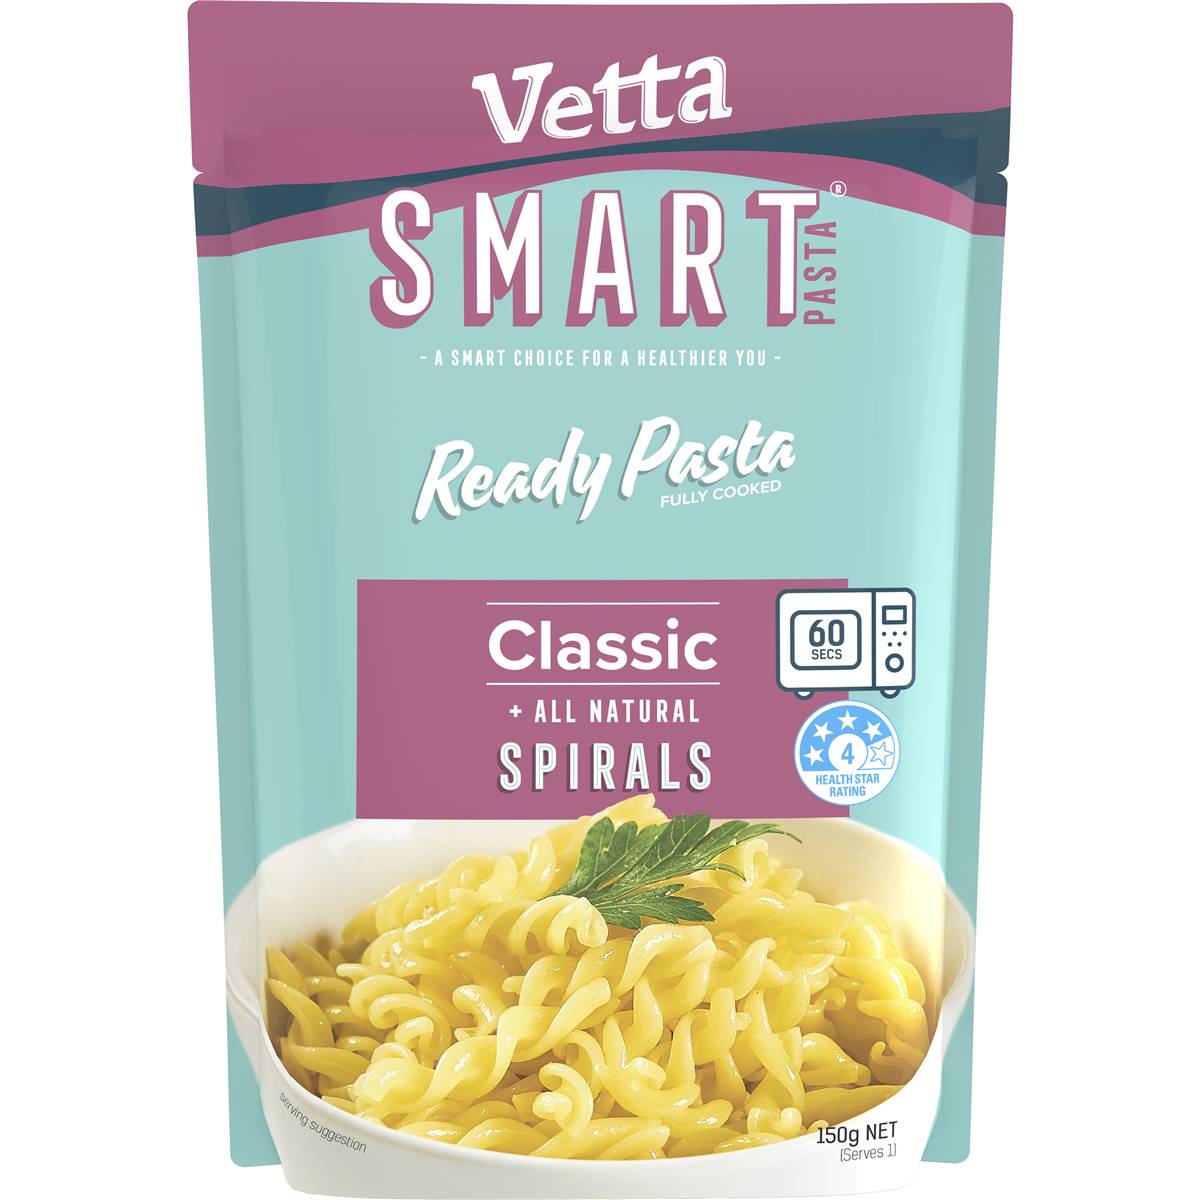 Calories in Vetta Microwave Ready Pasta Classic Spirals